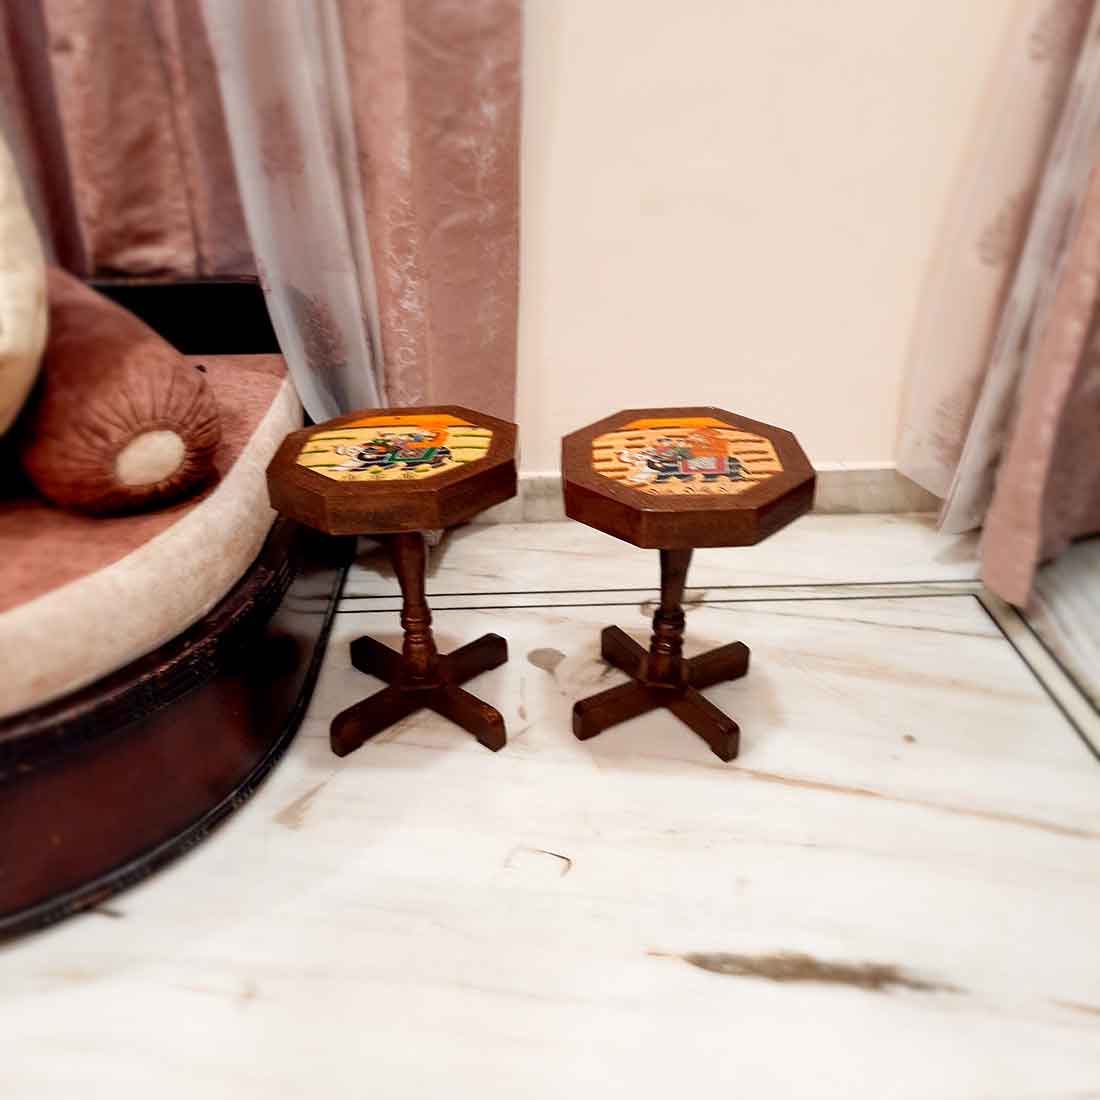 Wooden Side Table Set | End Table | Stool Set - for Living Room, Bedroom, Sofa Sides & Gifts - 15 Inch (Pack of 2) - Apkamart